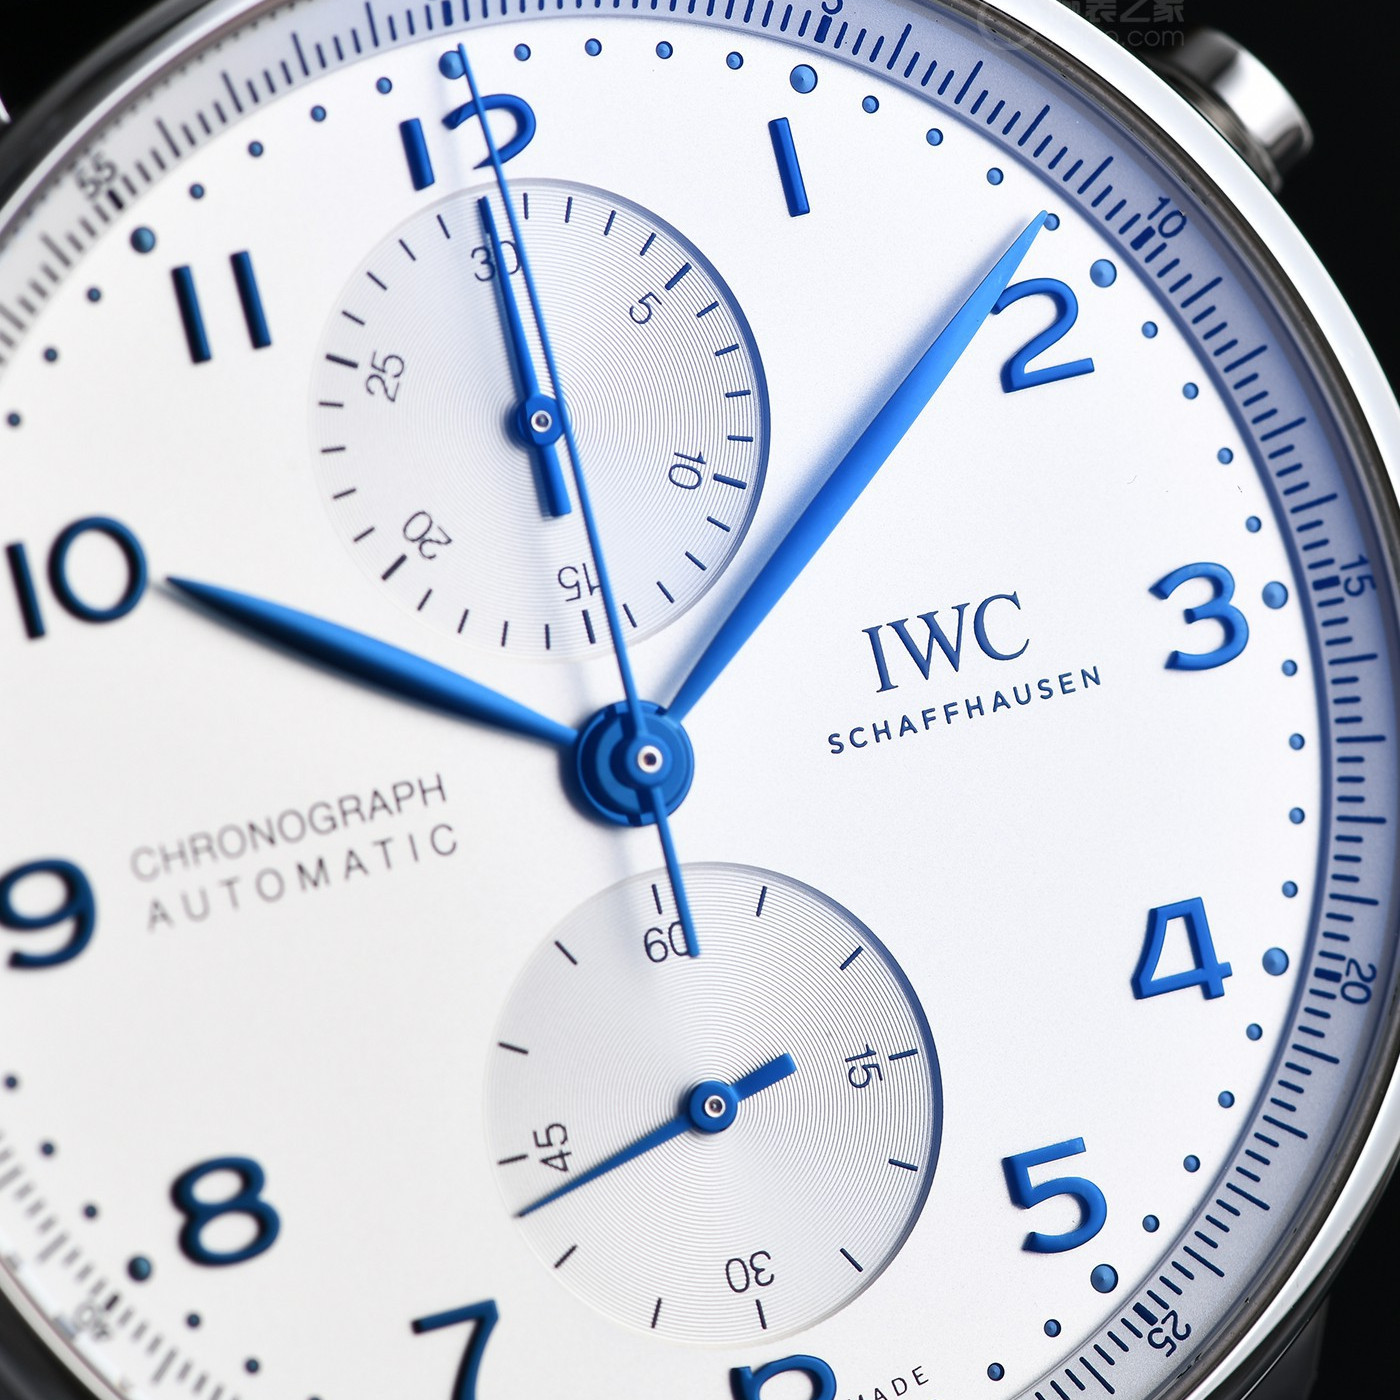 IWC replica watch